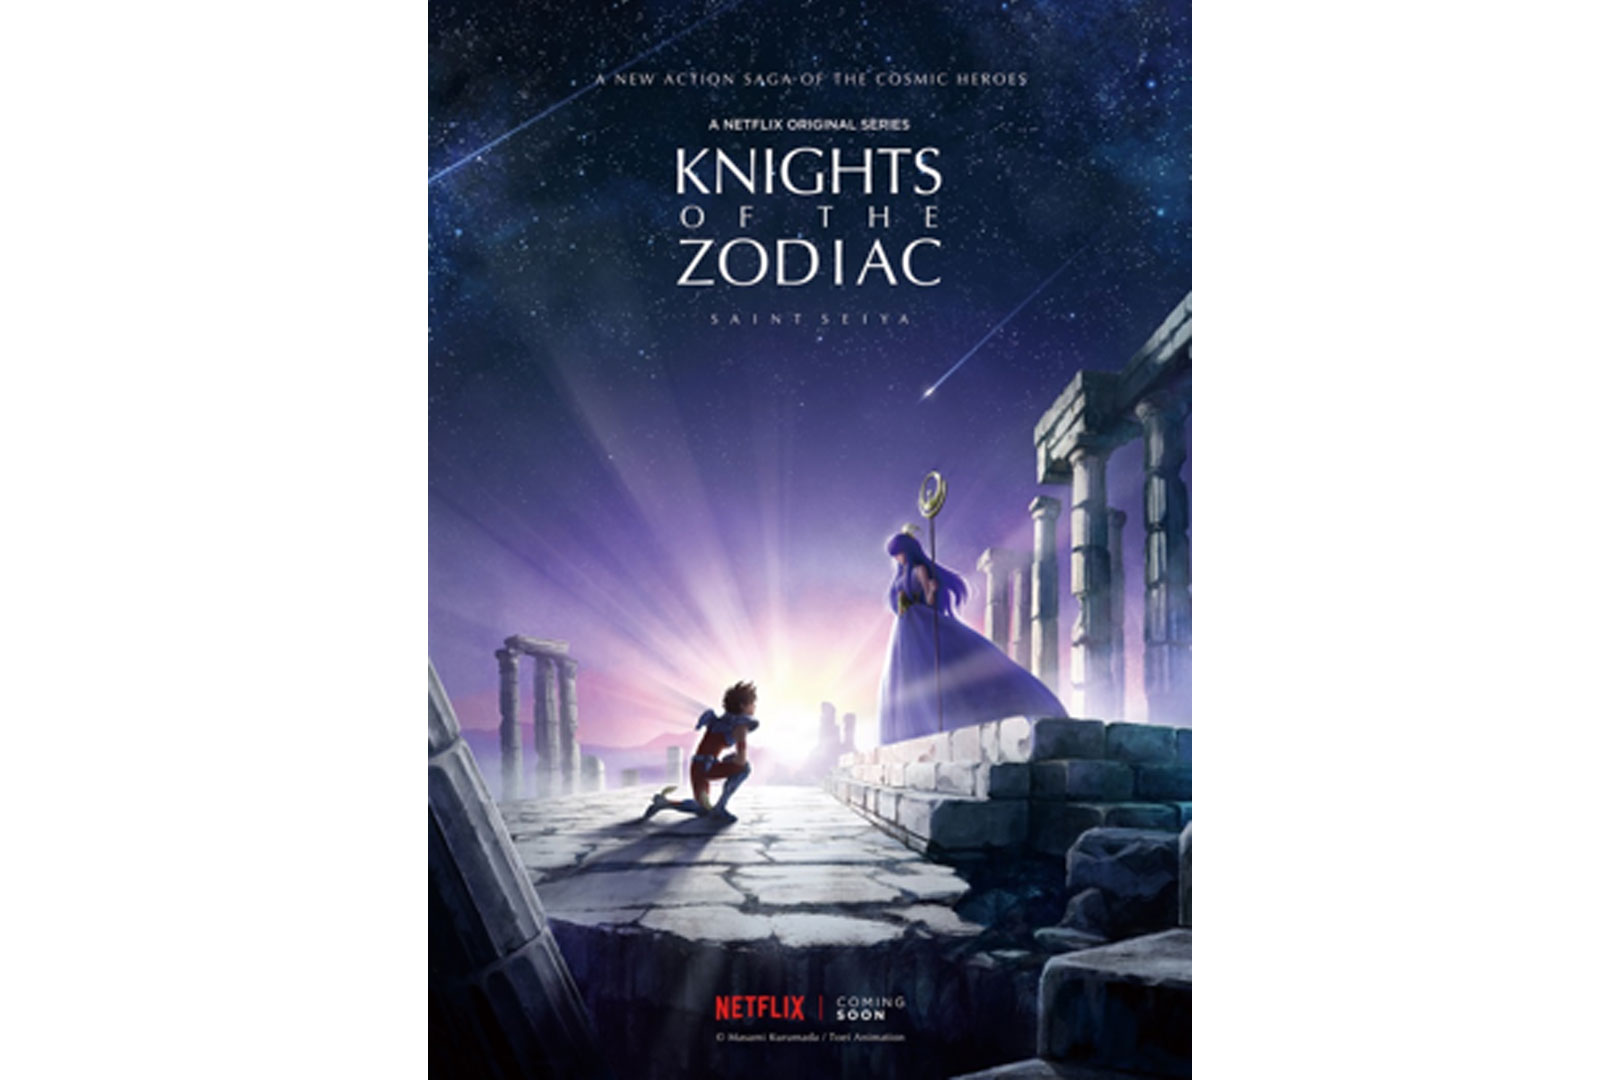 Knights of the Zodiac: SAINT SEIYA” to be released on Netflix Original